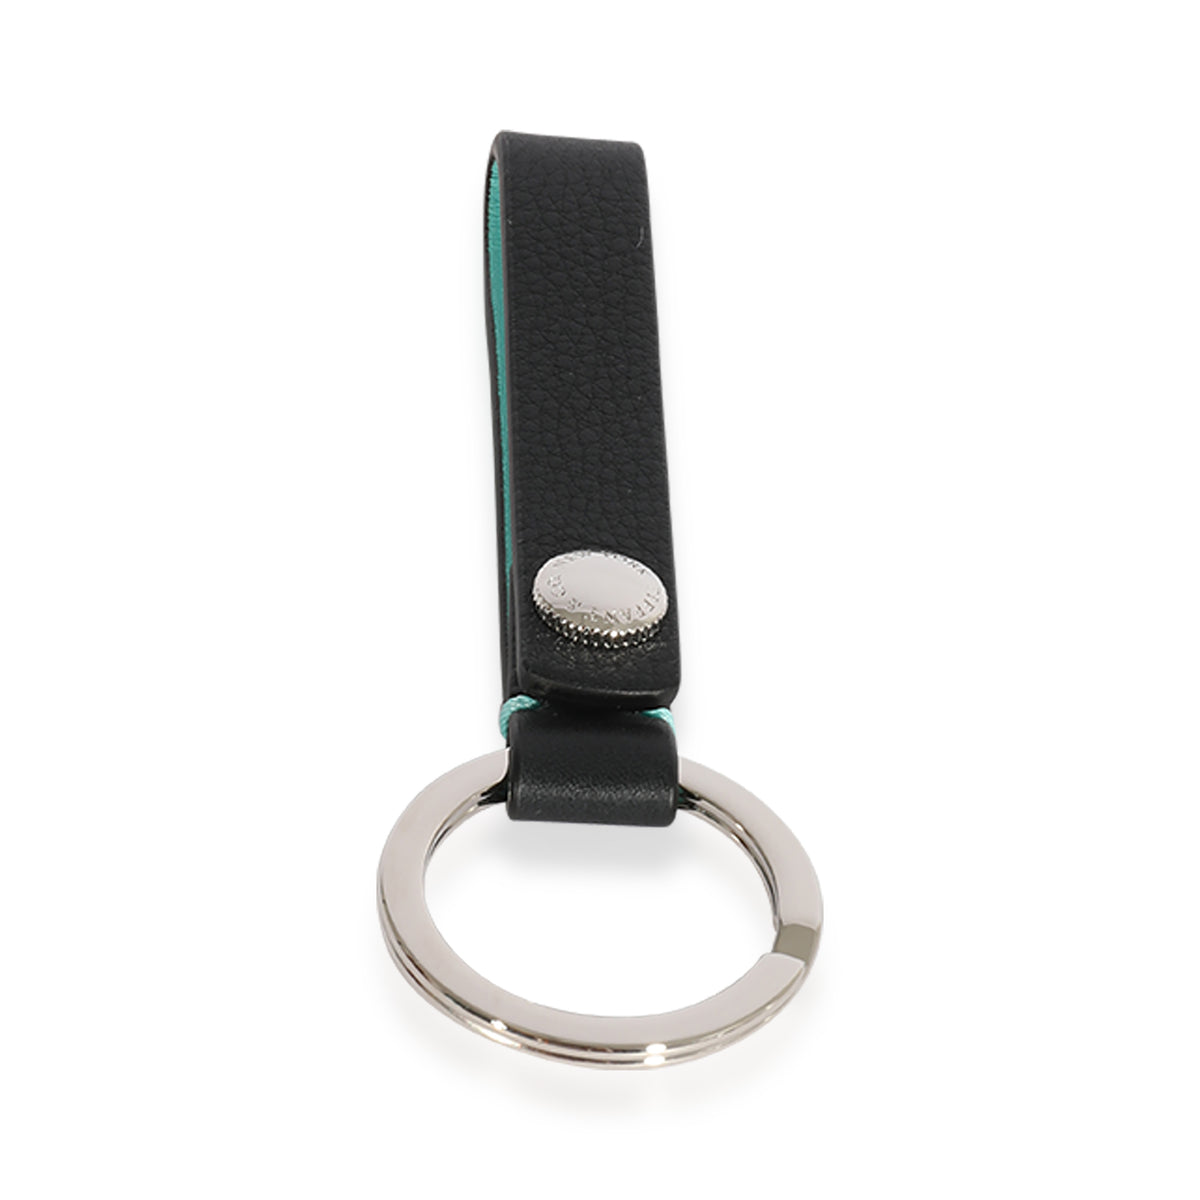 Tiffany & Co. Black & Teal Leather Snap Loop Keychain